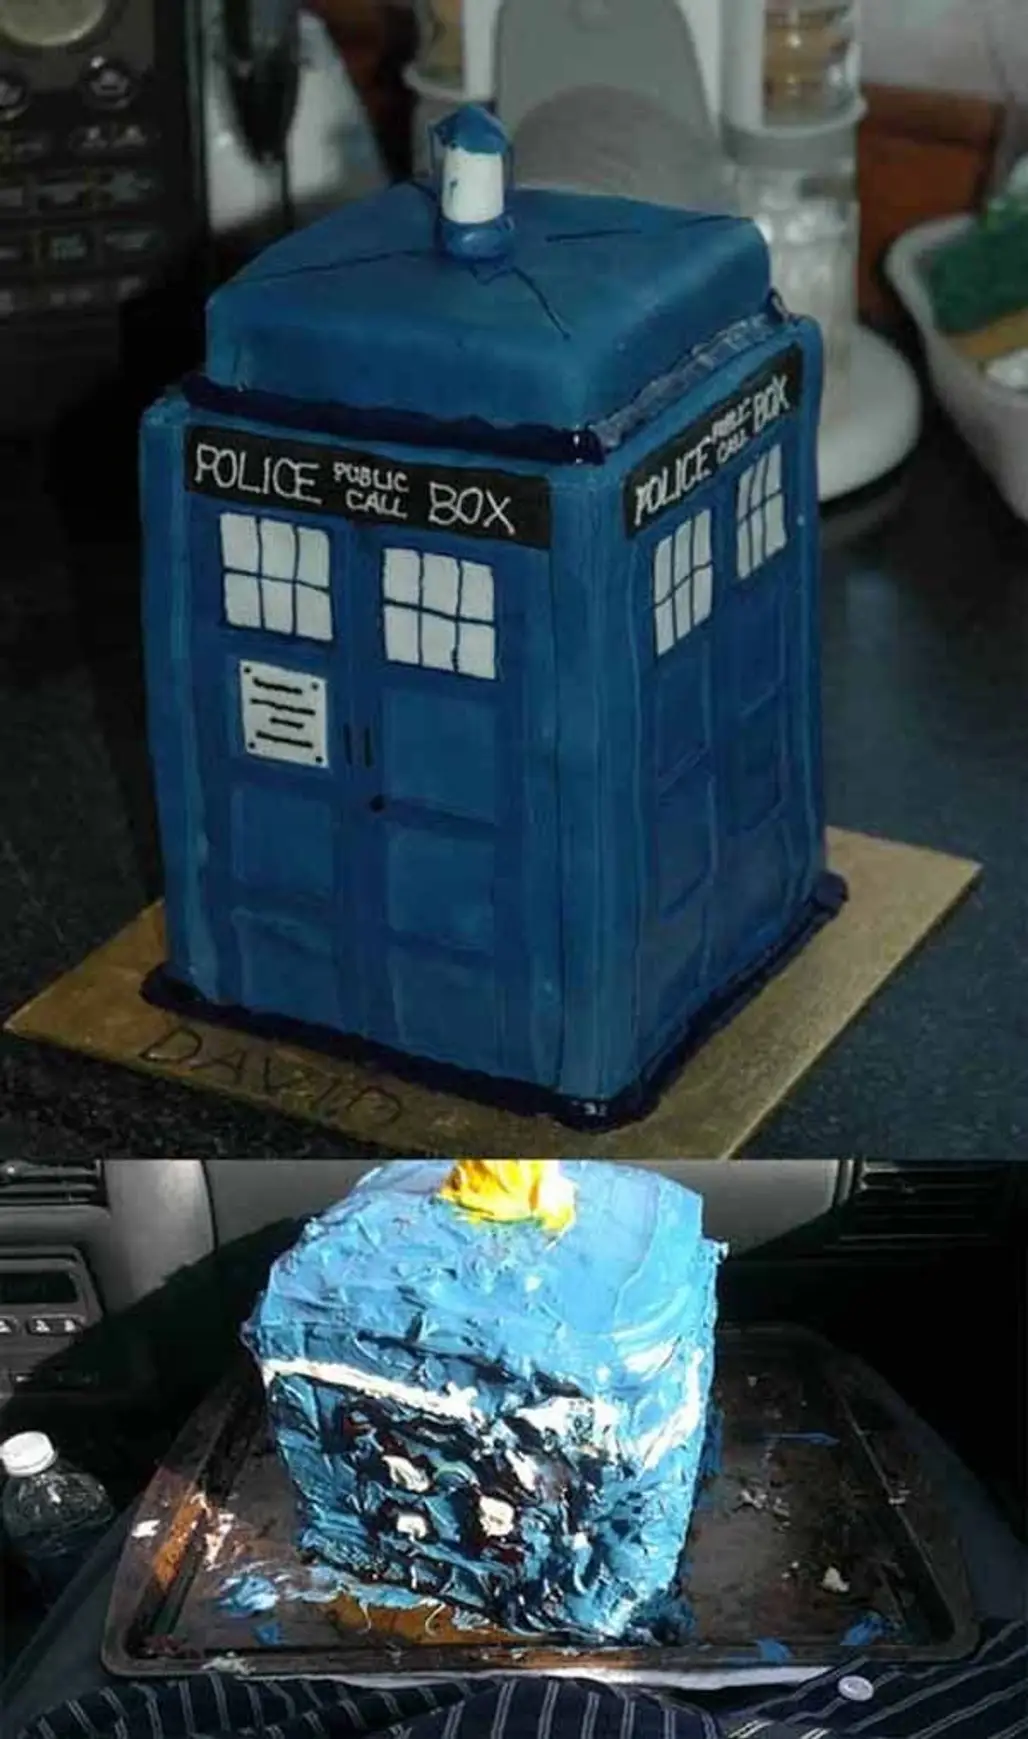 Police Call Box Cake